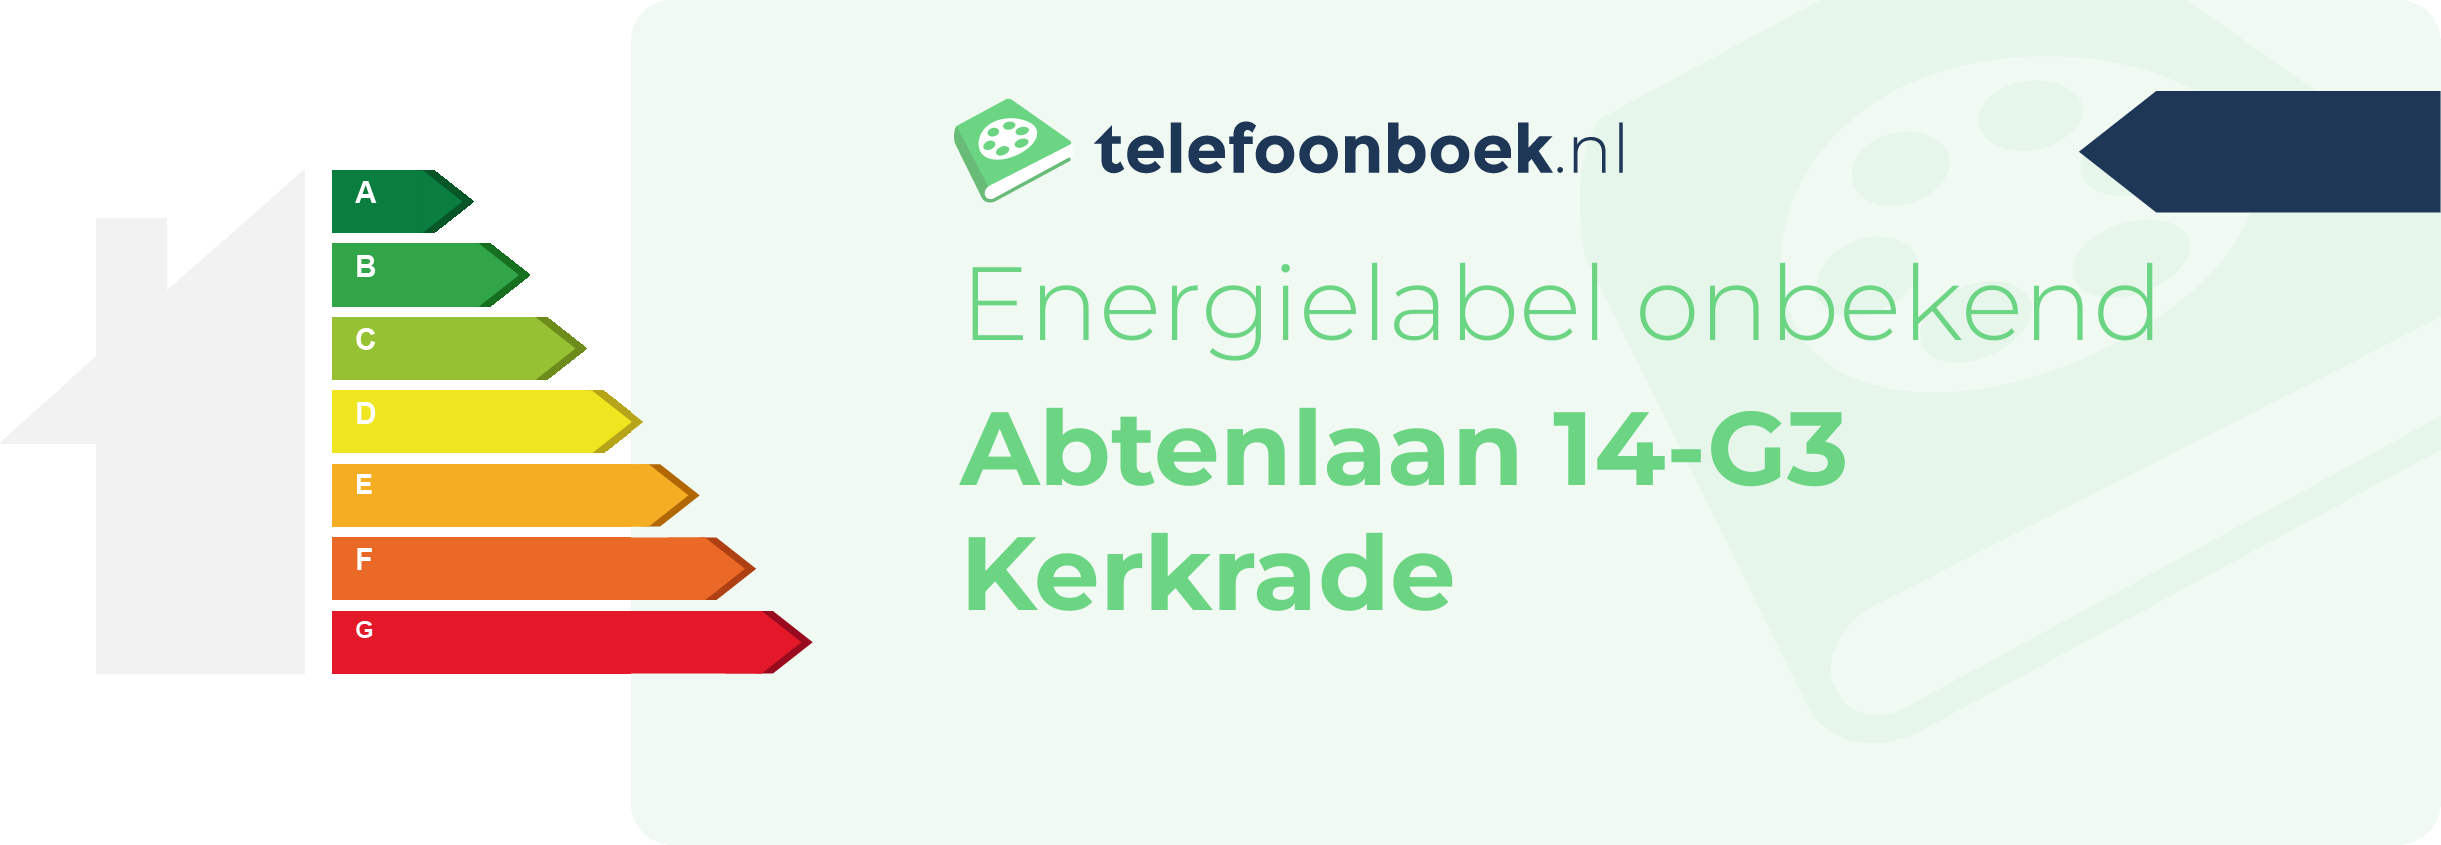 Energielabel Abtenlaan 14-G3 Kerkrade